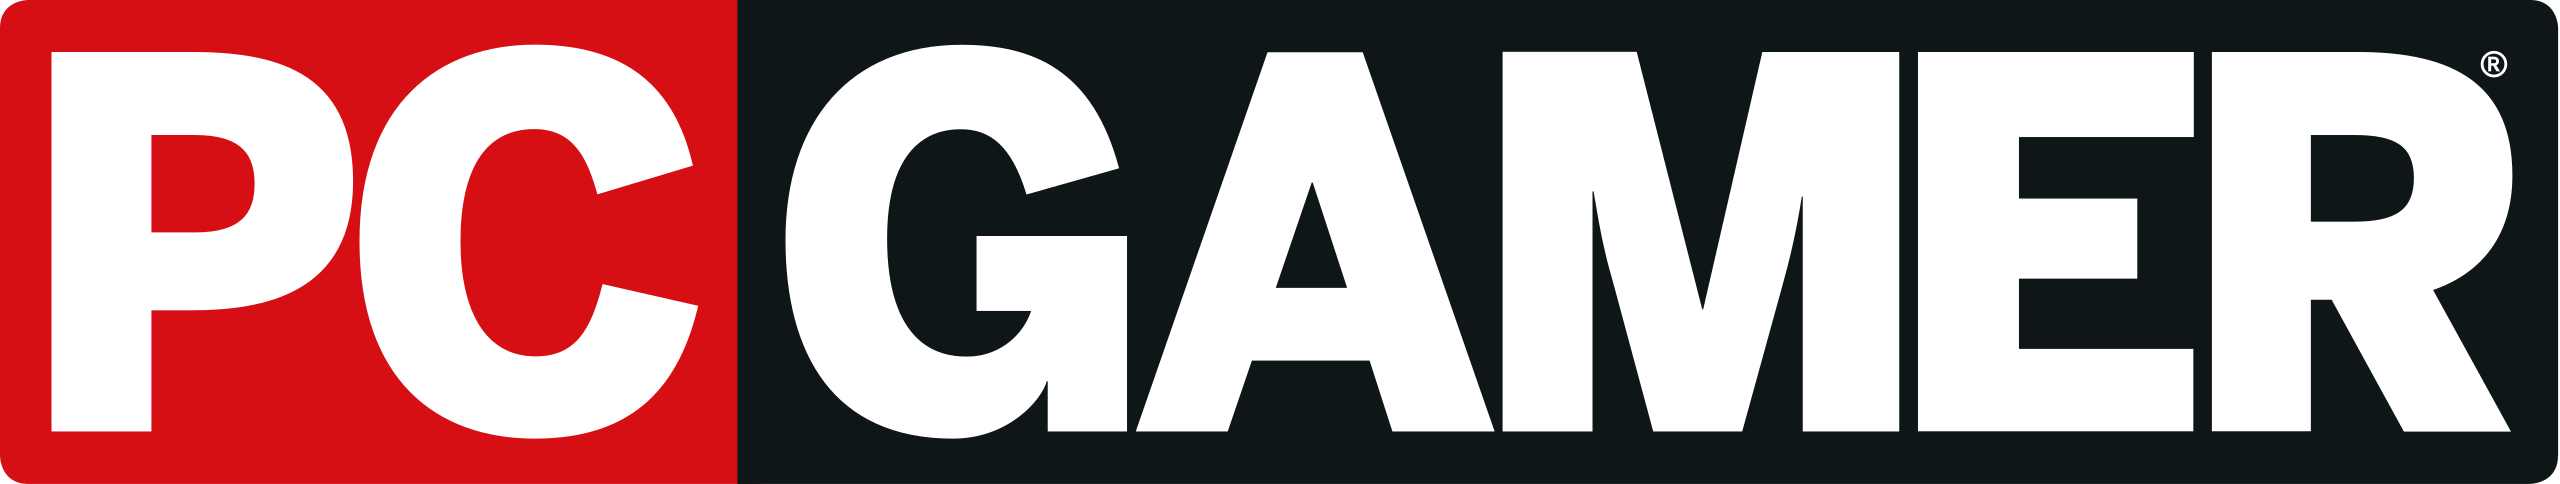 File:Pc game logo.png - Wikipedia